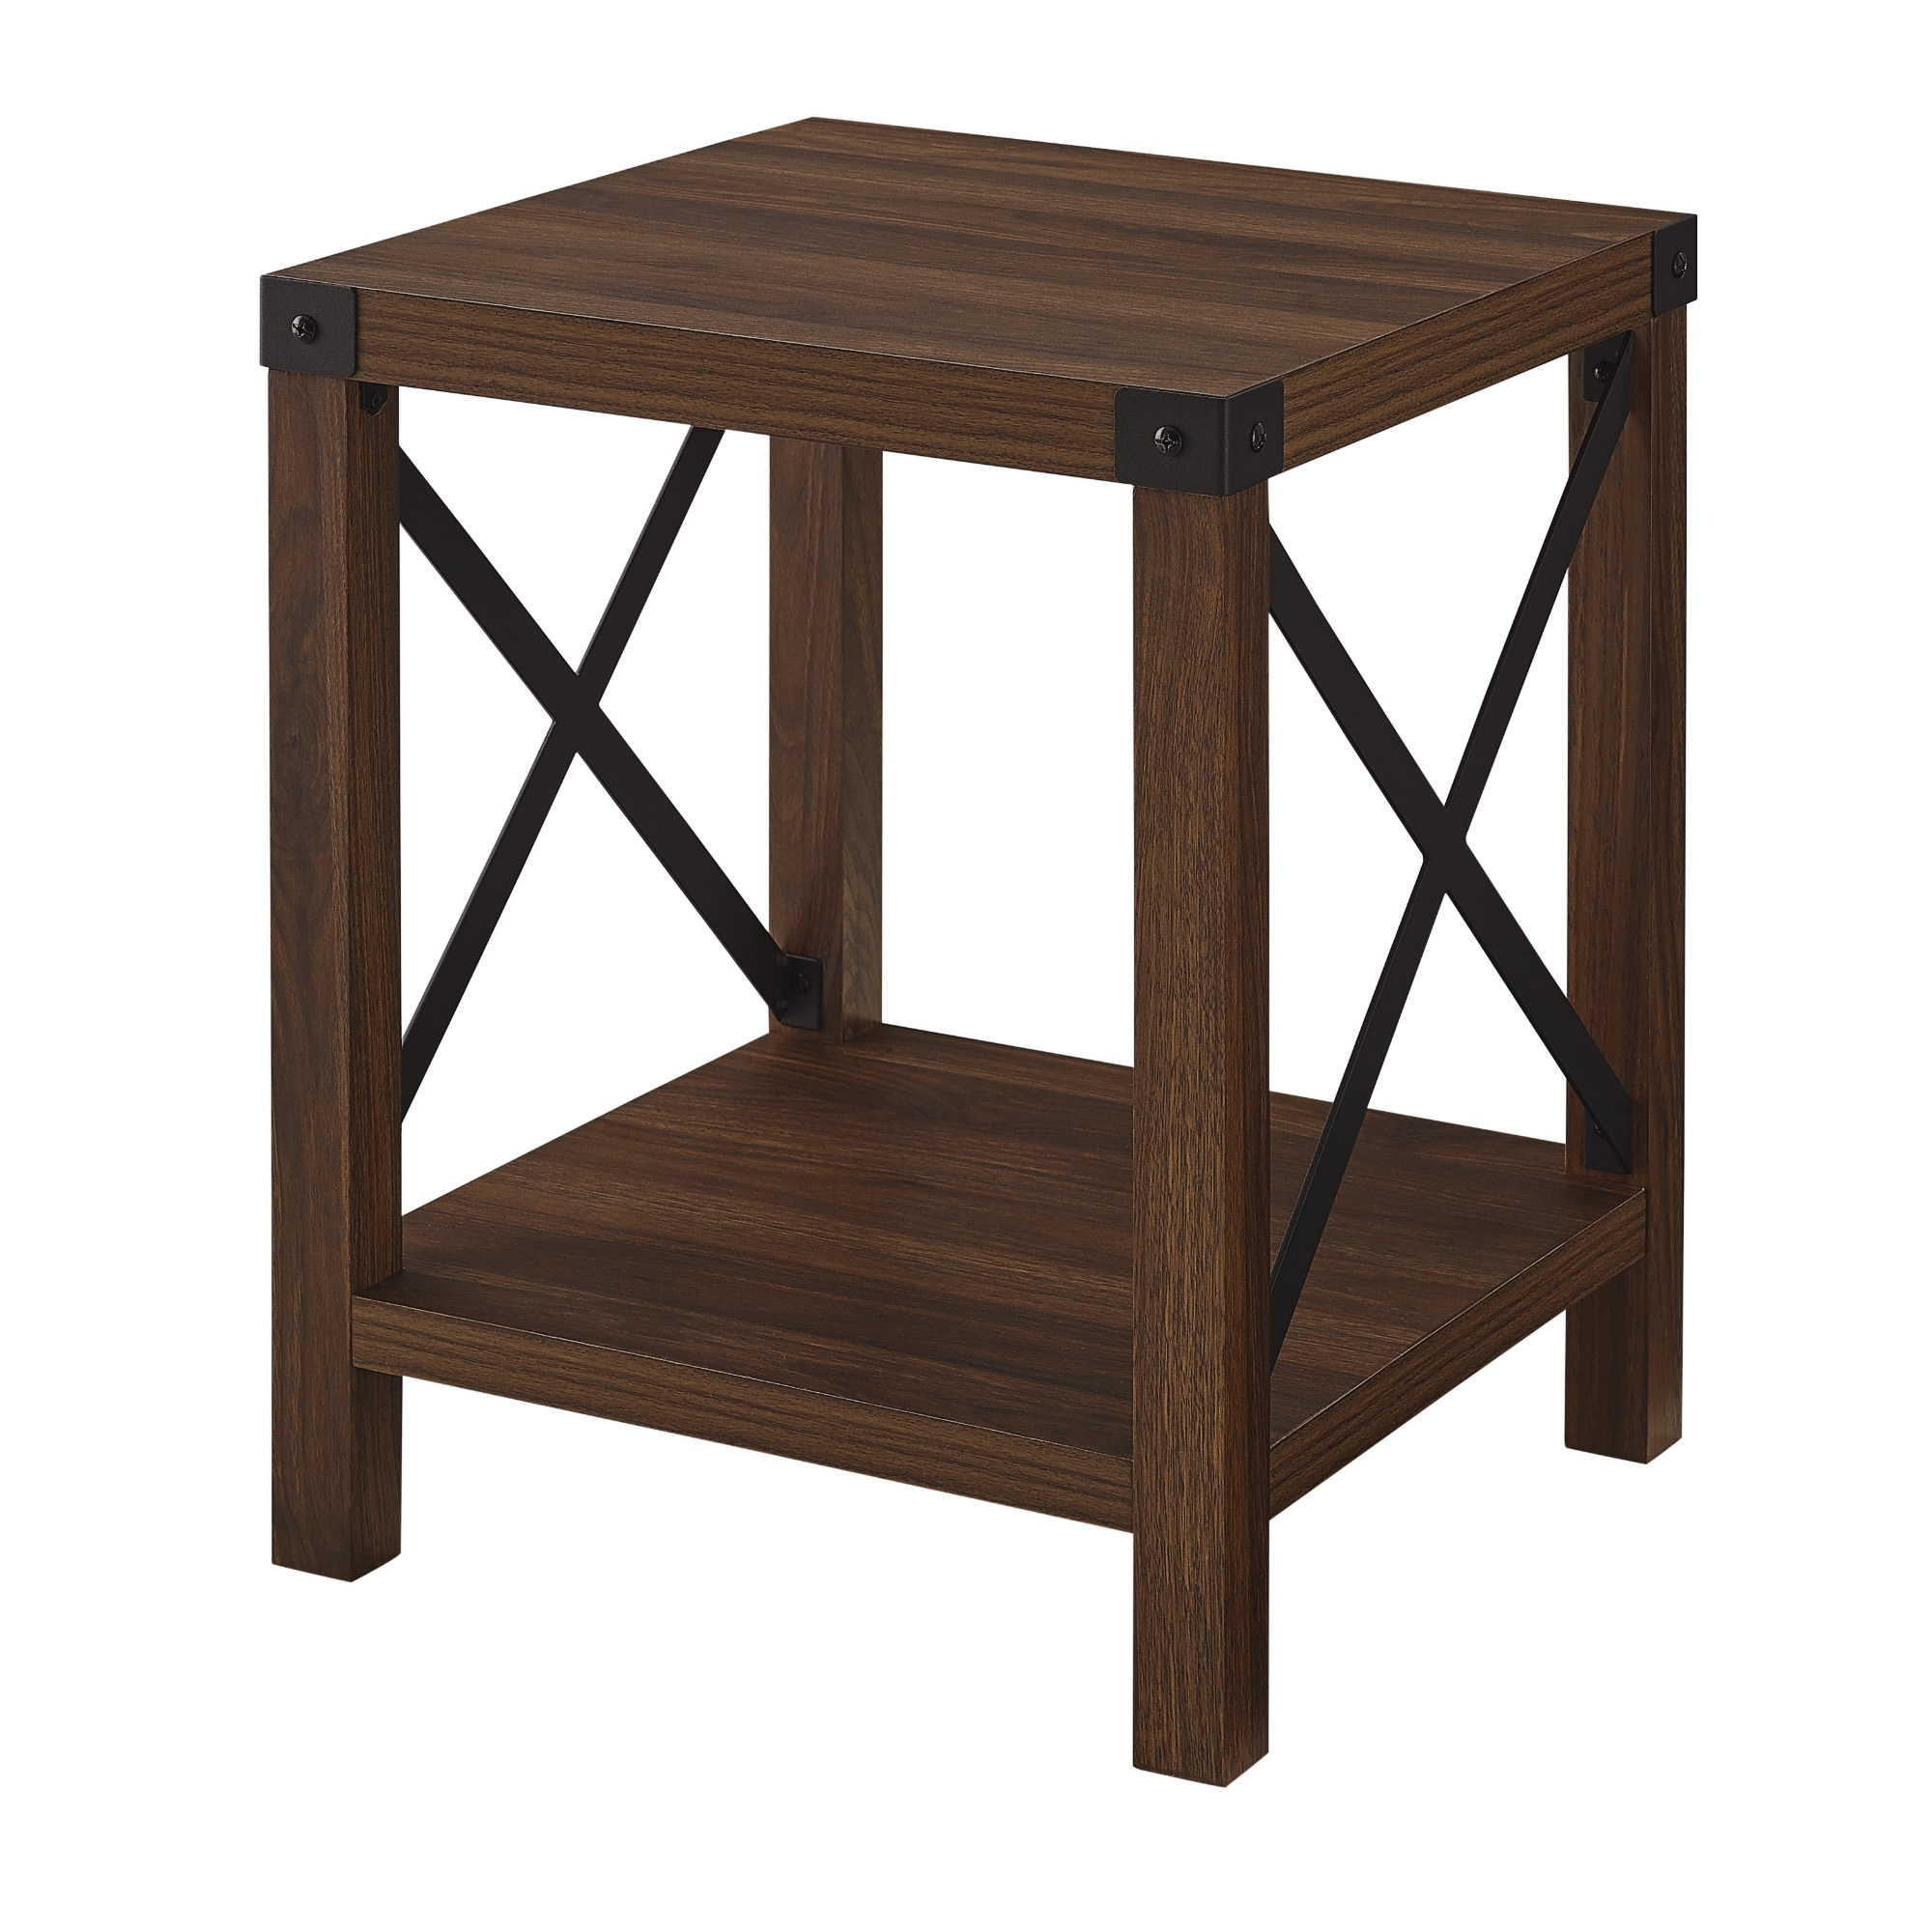 Metal X Rustic Wood Side Table - Dark Walnut - Image 2